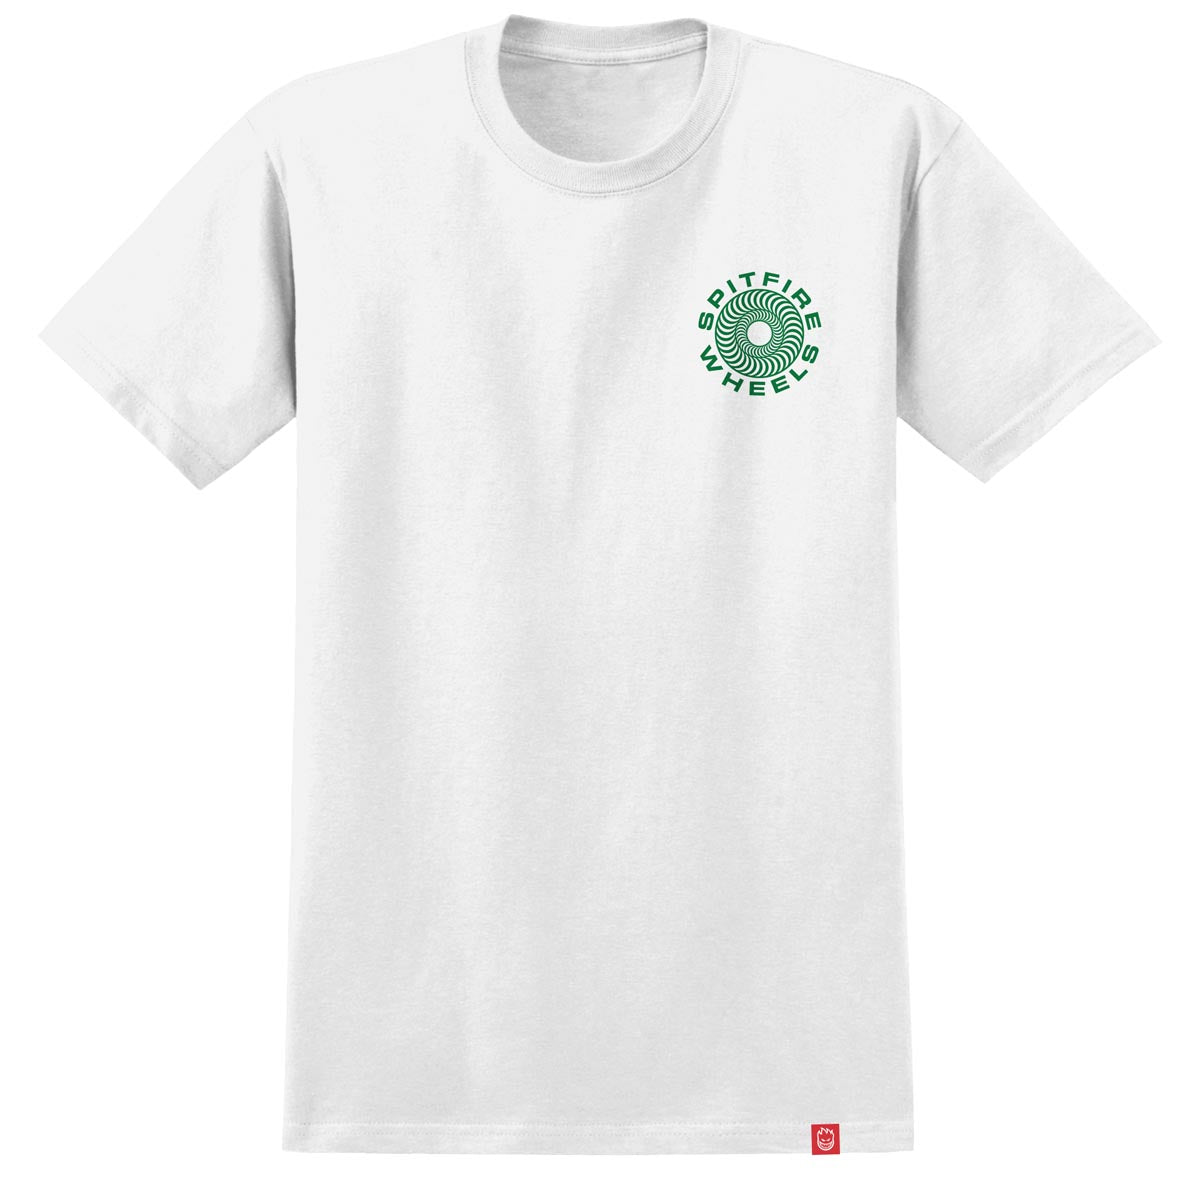 Spitfire Classic '87 Swirl Short Sleeve T-Shirt (White/Green) - Apple Valley Emporium